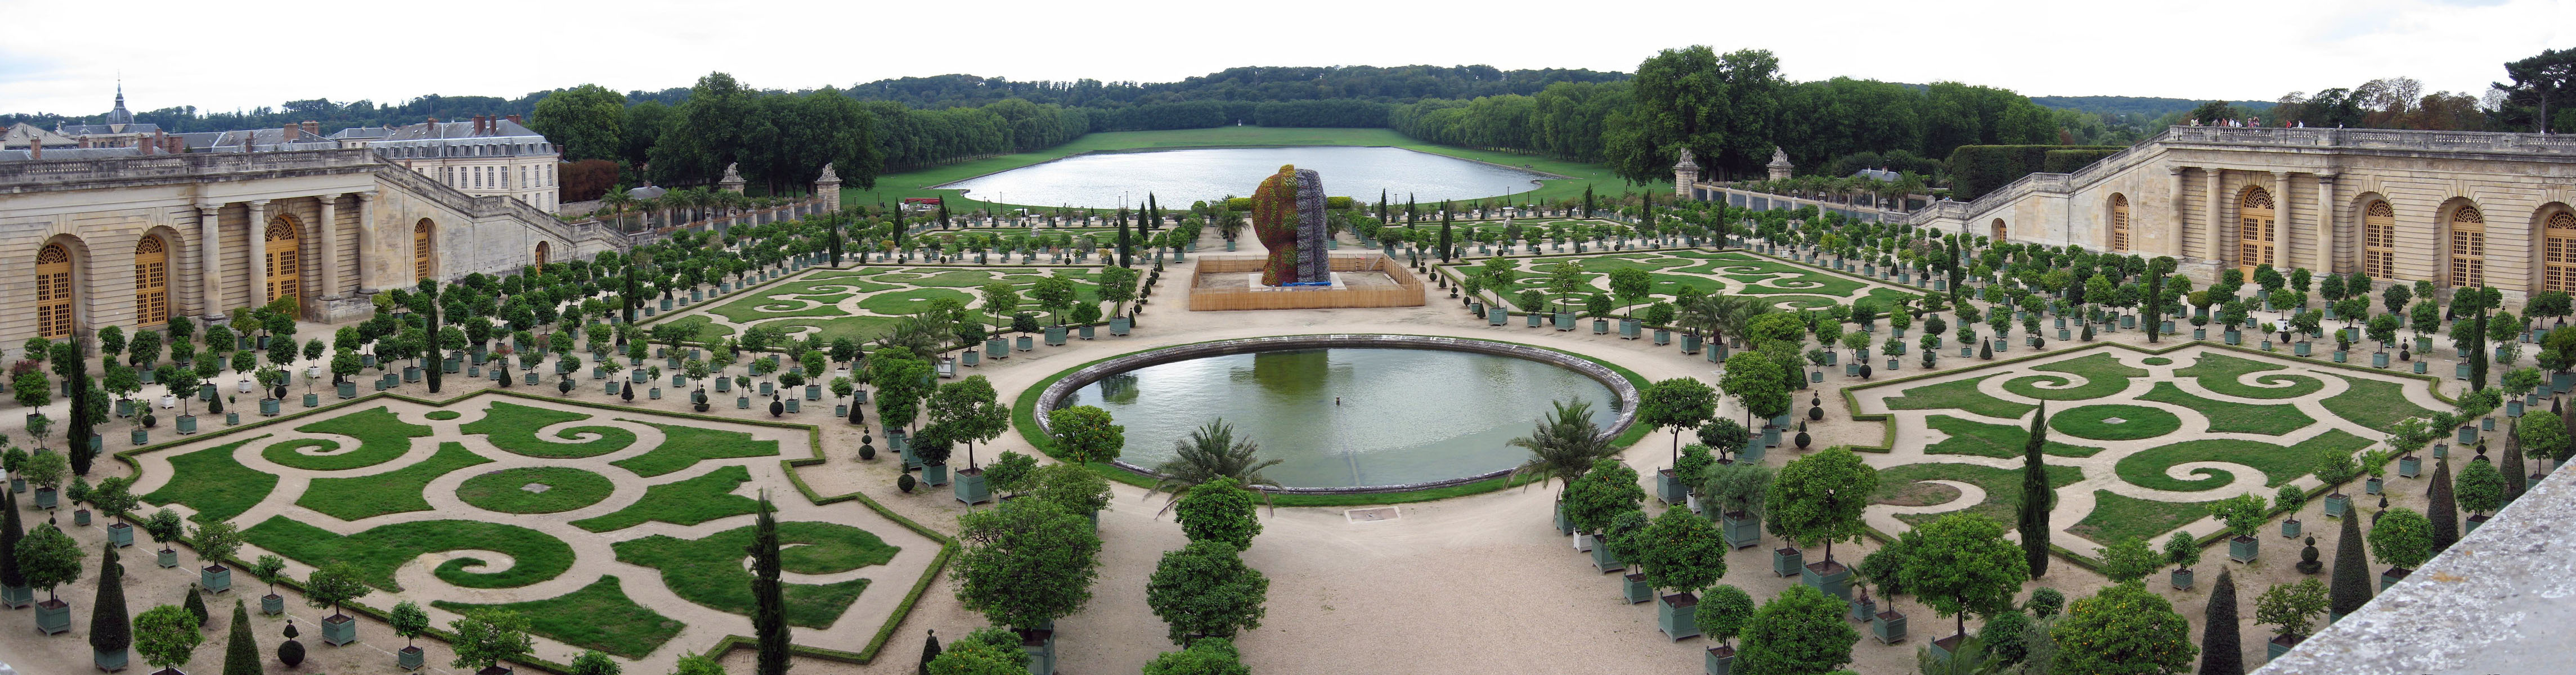 The orangery - Castle of Versailles - France (2).jpg